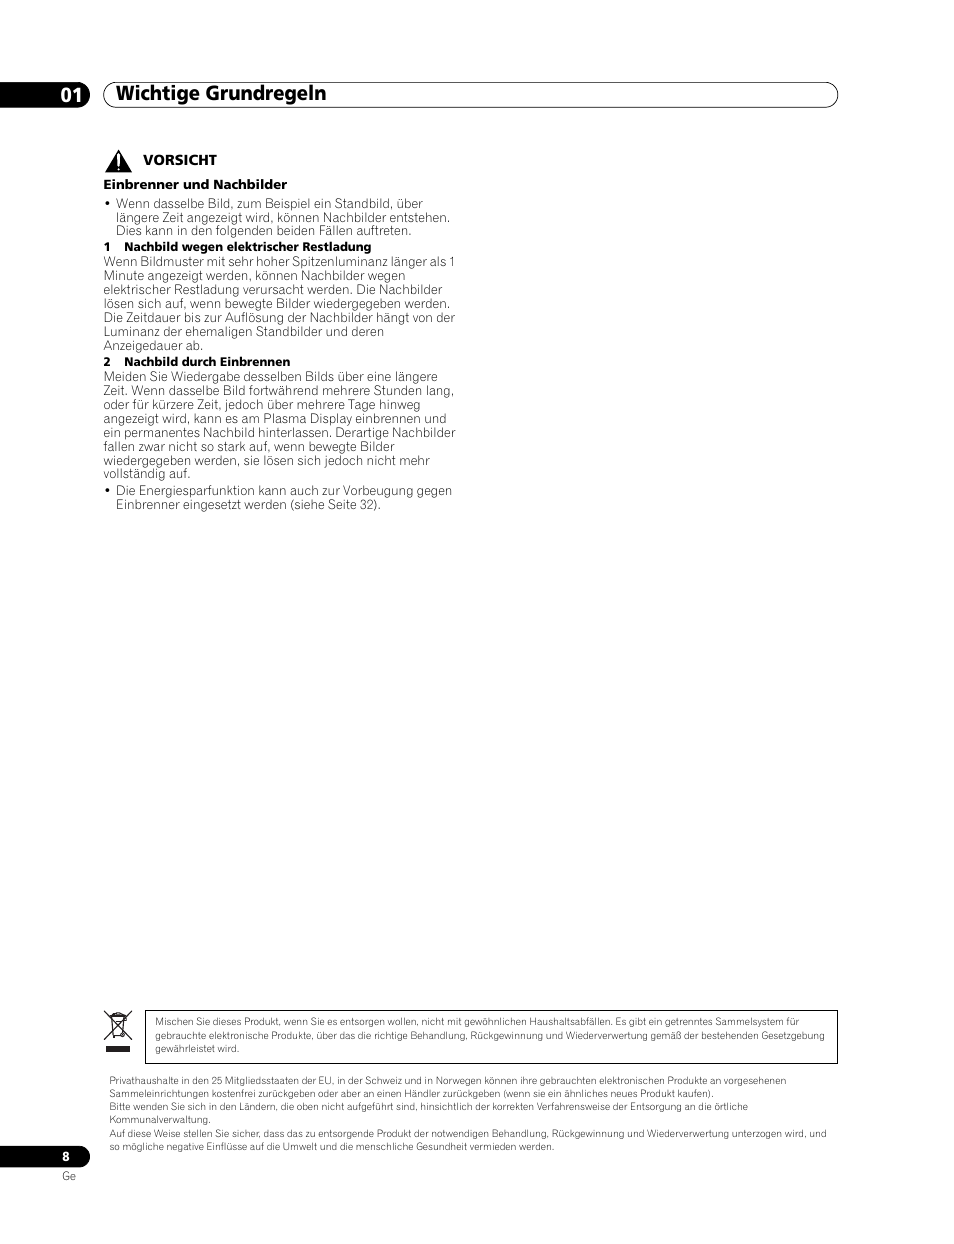 Wichtige grundregeln 01 | Pioneer PDP-436RXE User Manual | Page 96 / 136